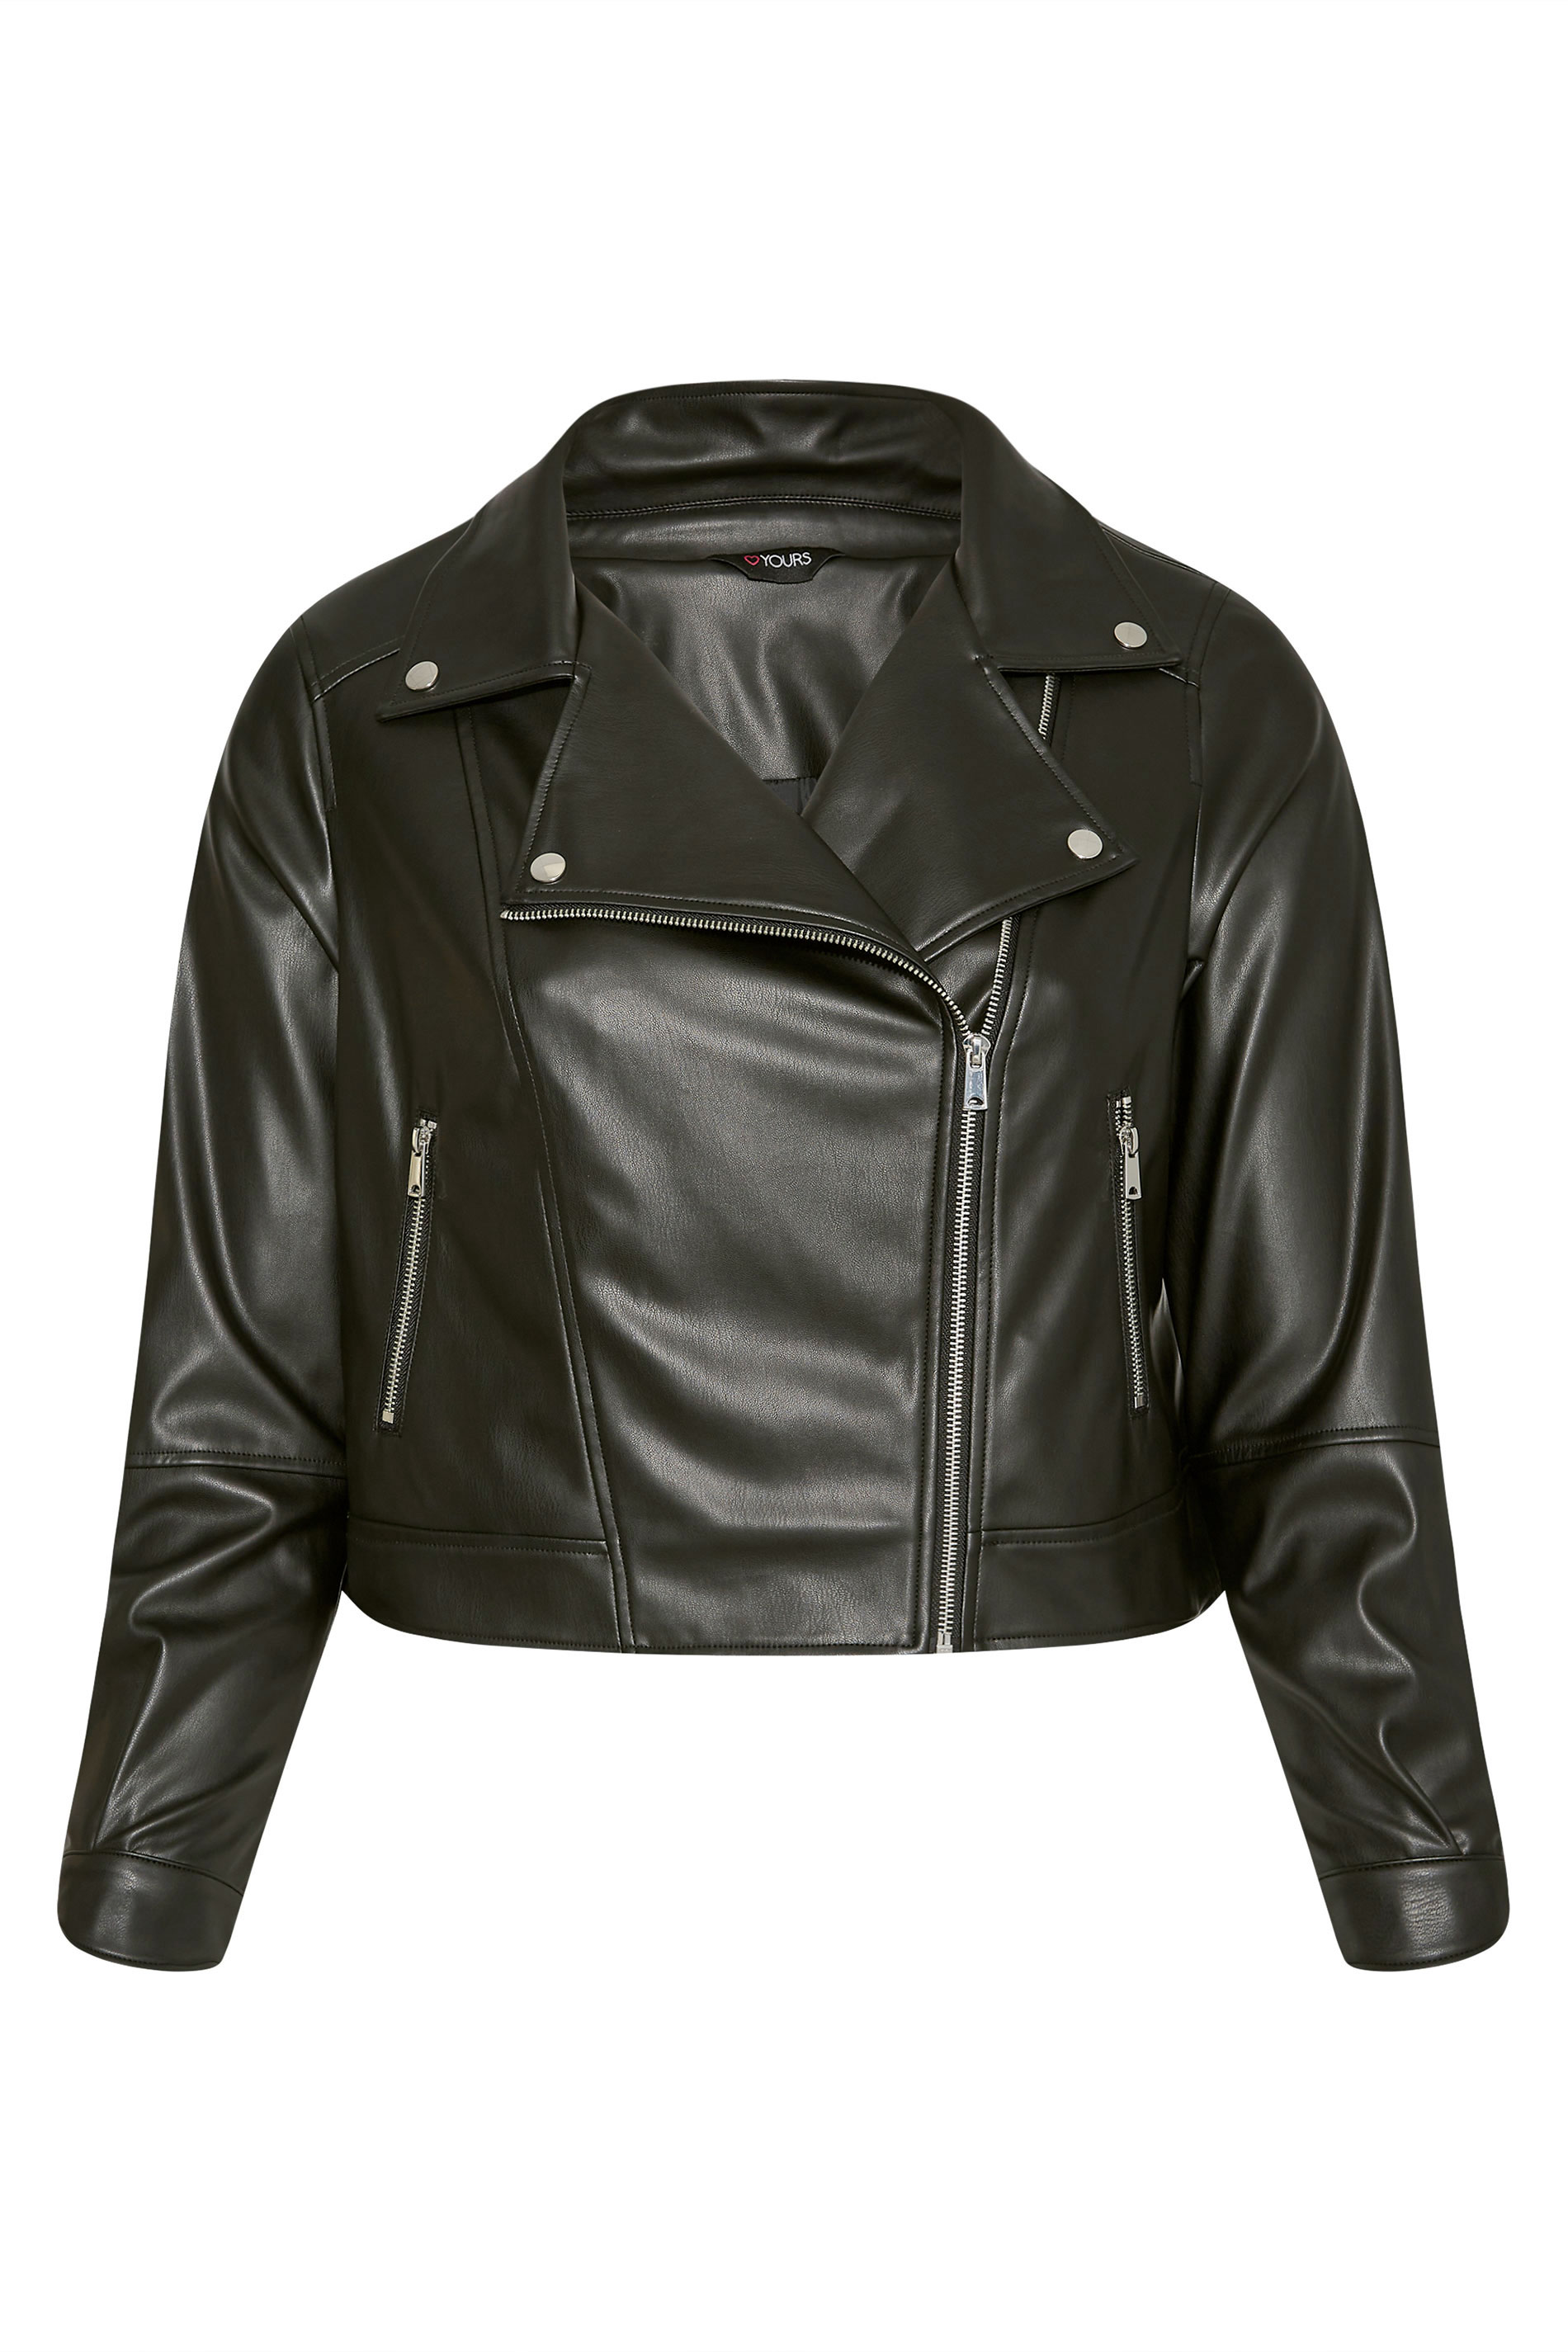 Panelled leather jacket Grey Farfetch Clothing Jackets Leather Jackets 